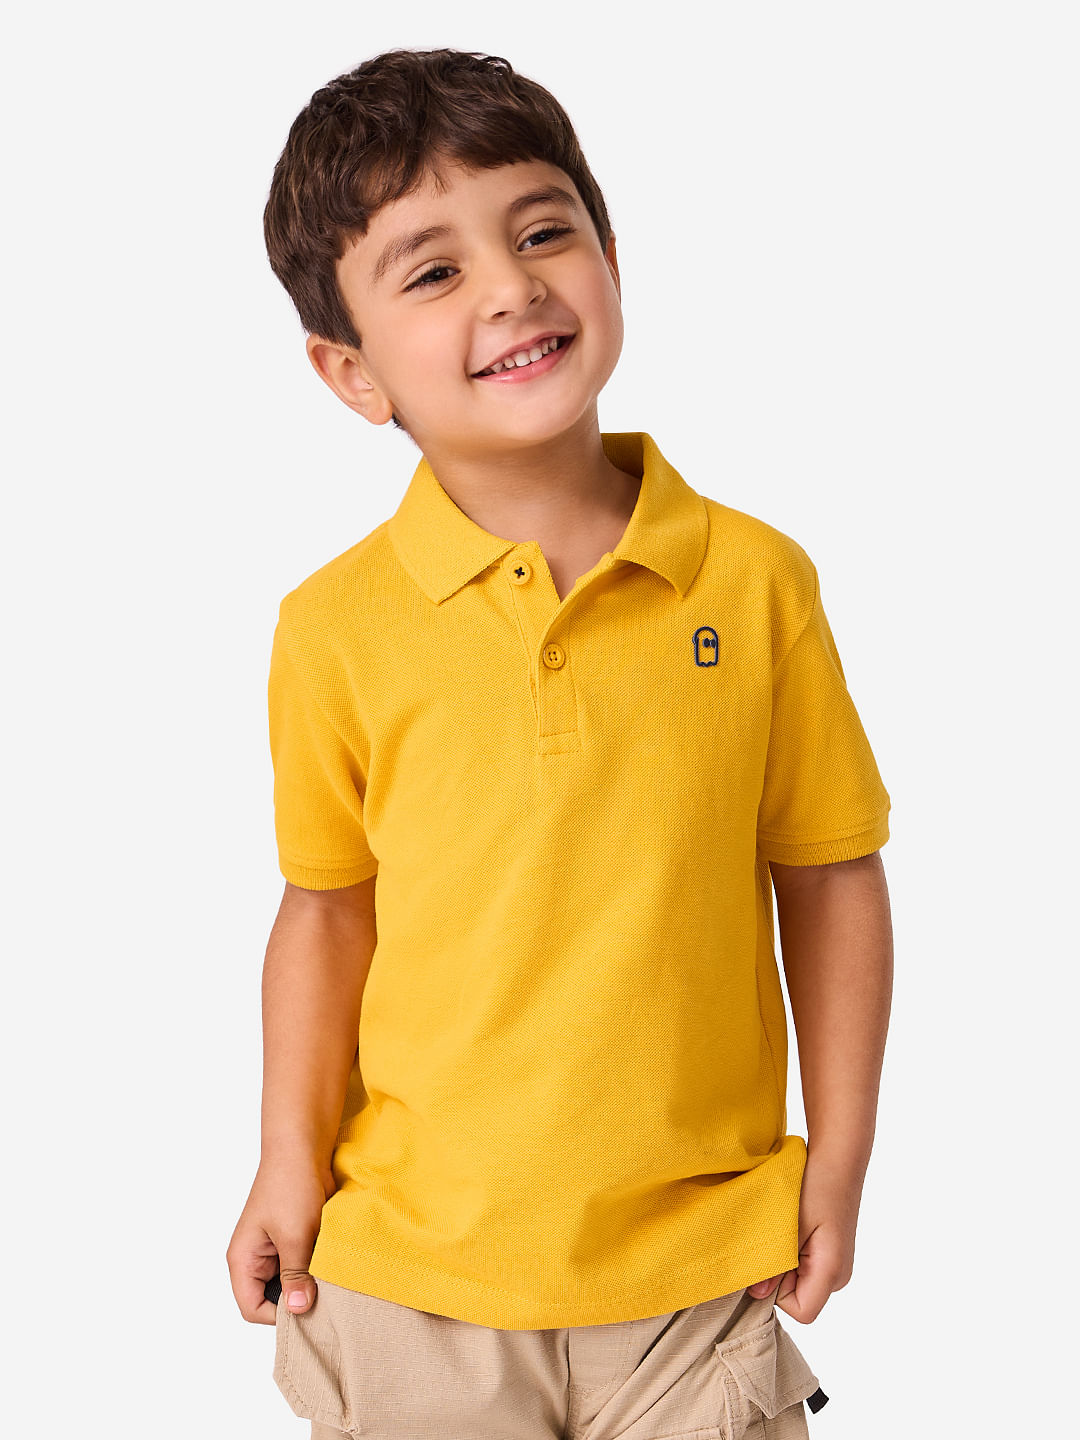 Buy Solids: Mustard Boys Polo T-shirt Online